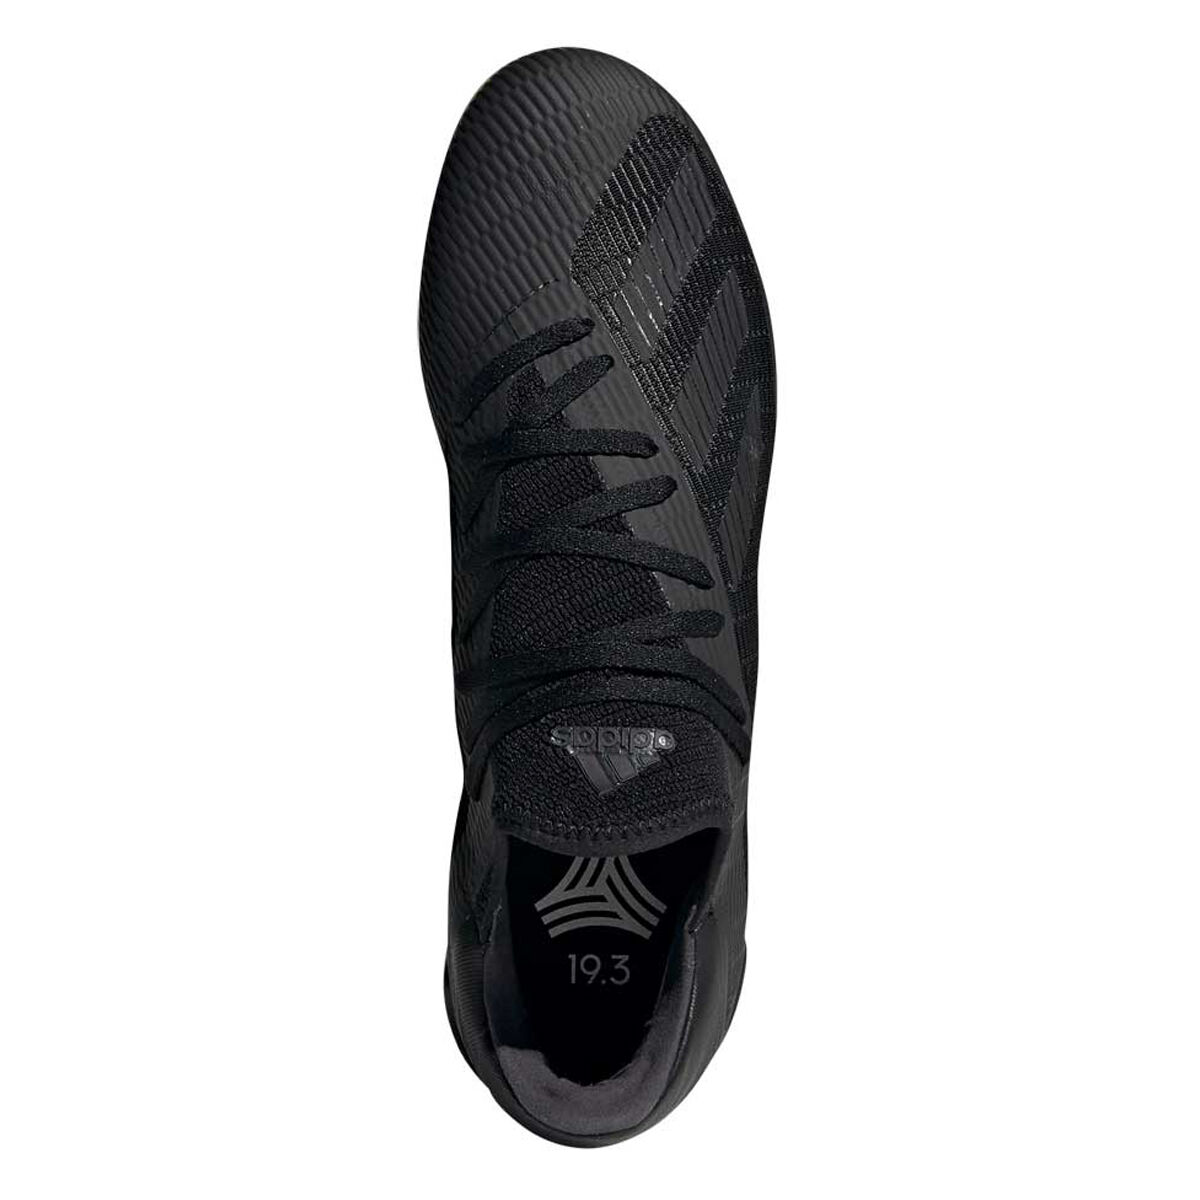 black adidas soccer shoes